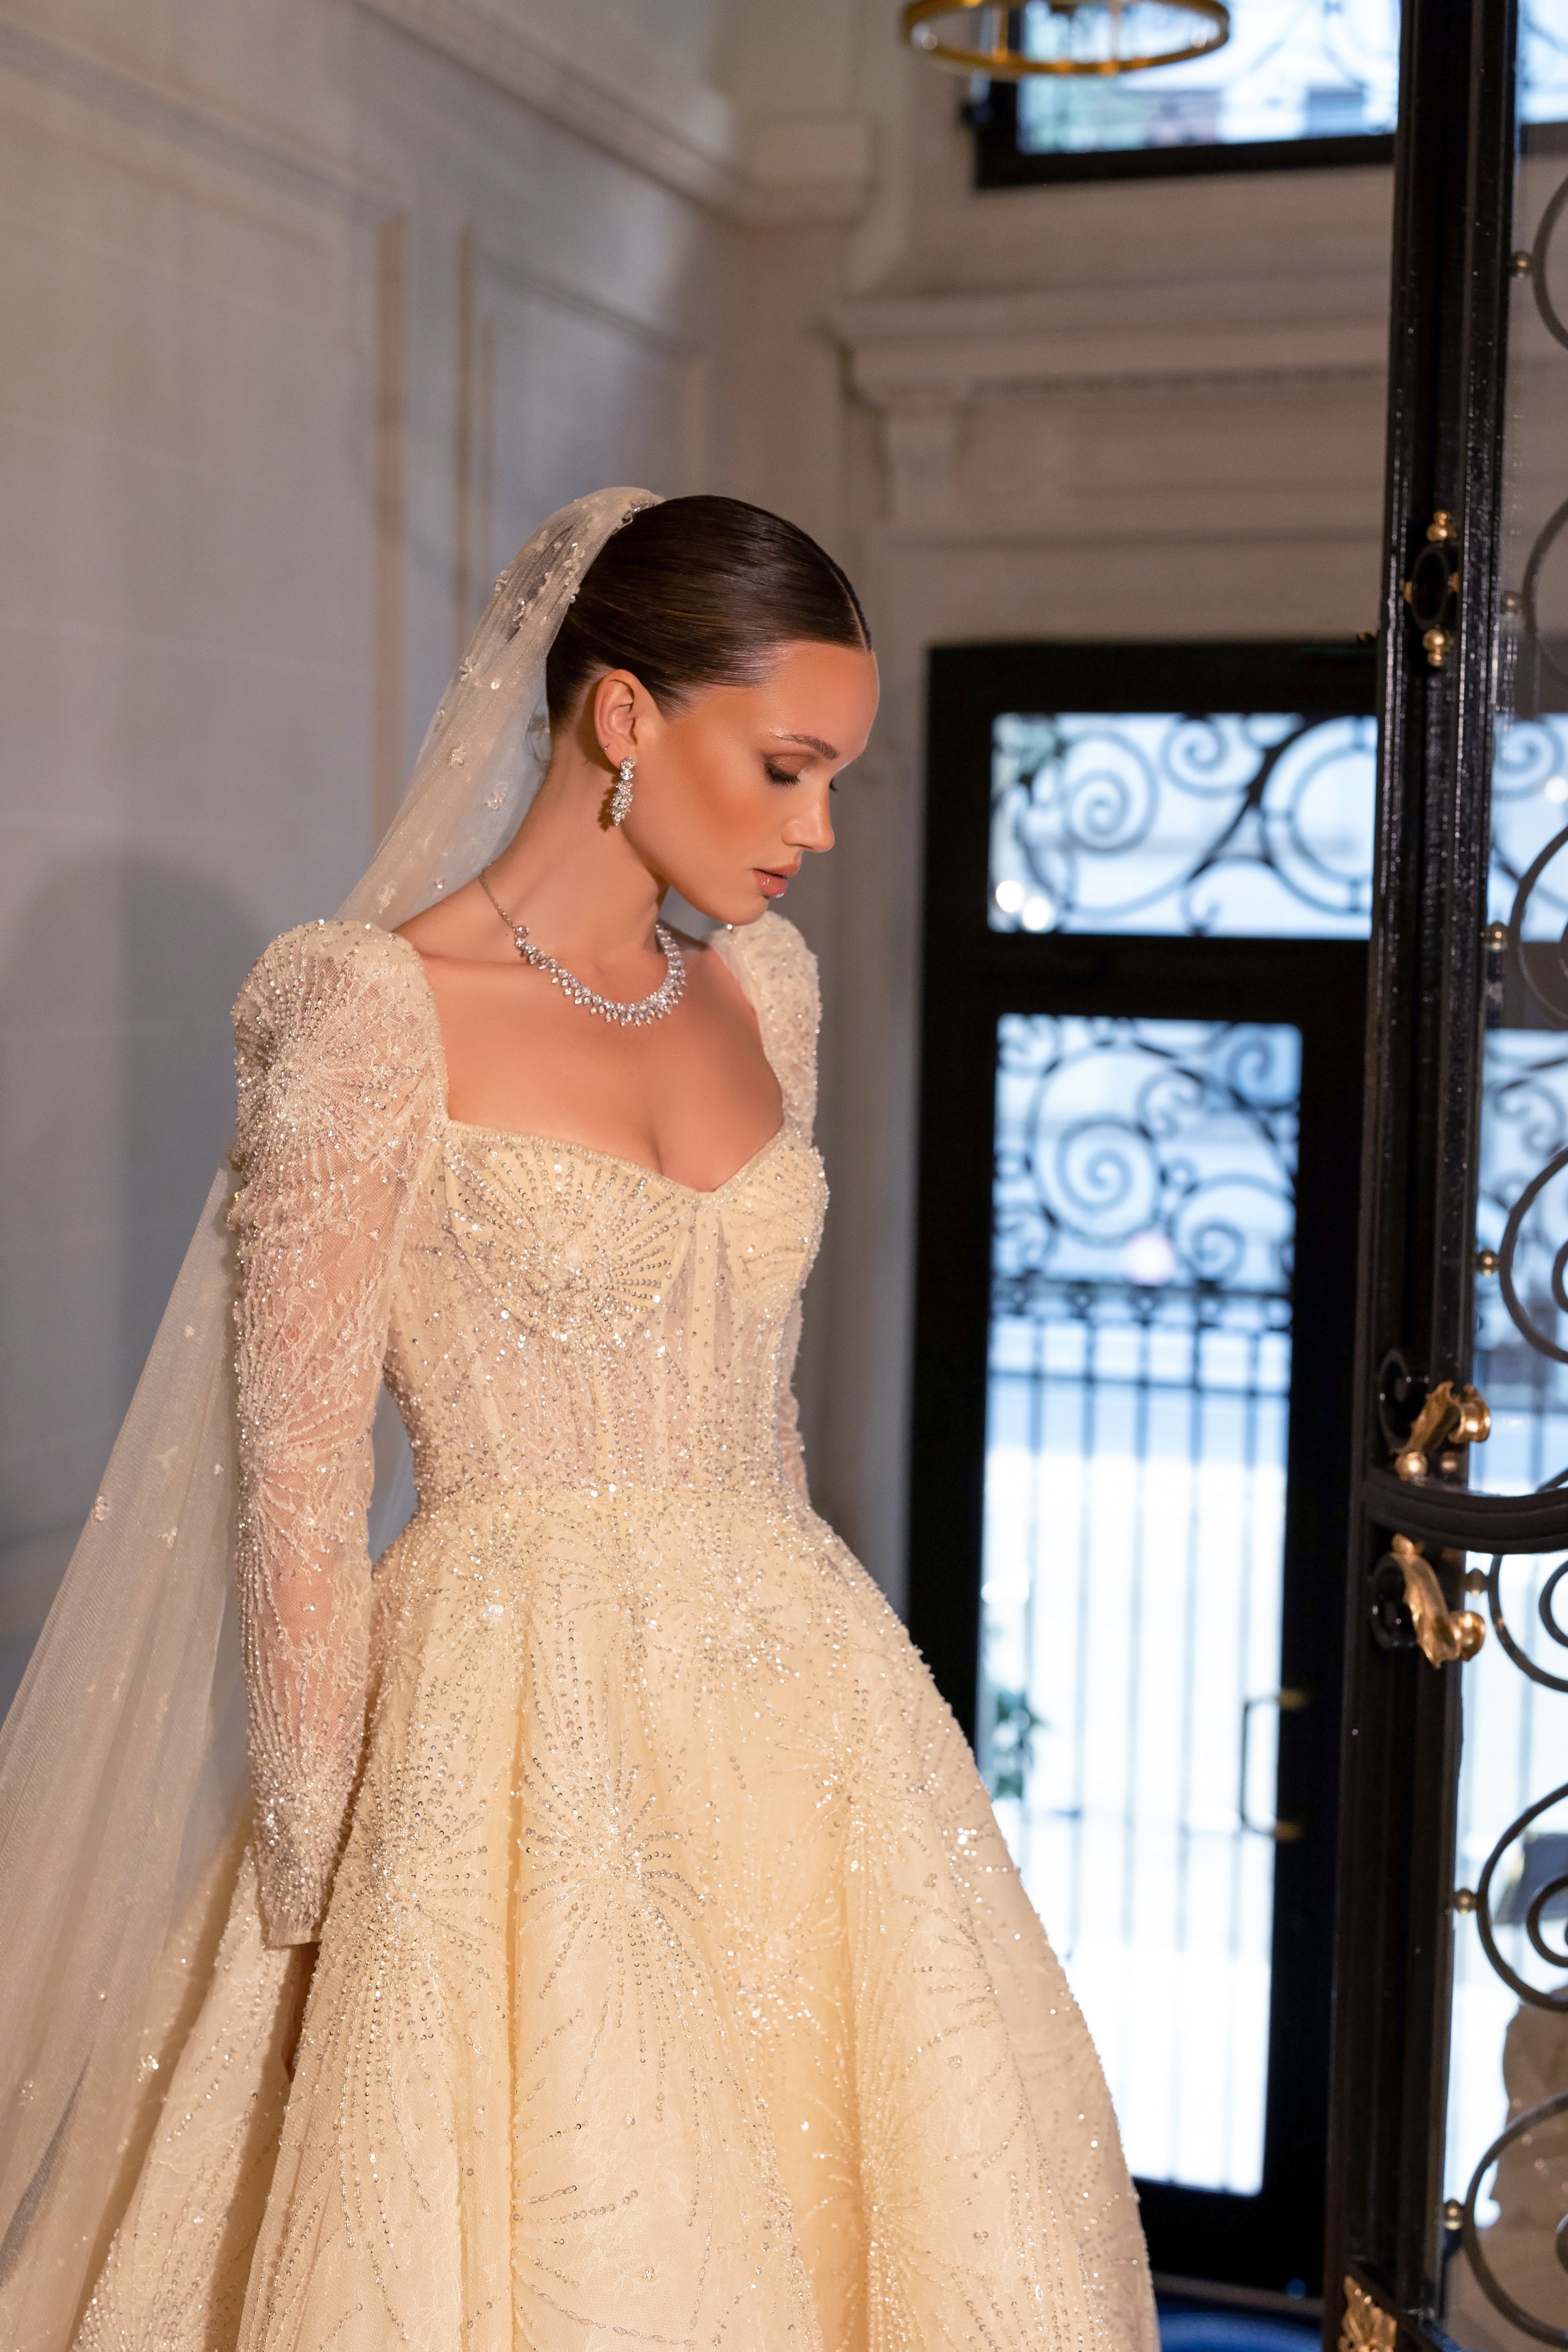 Long-sleeved wedding dress with long veil